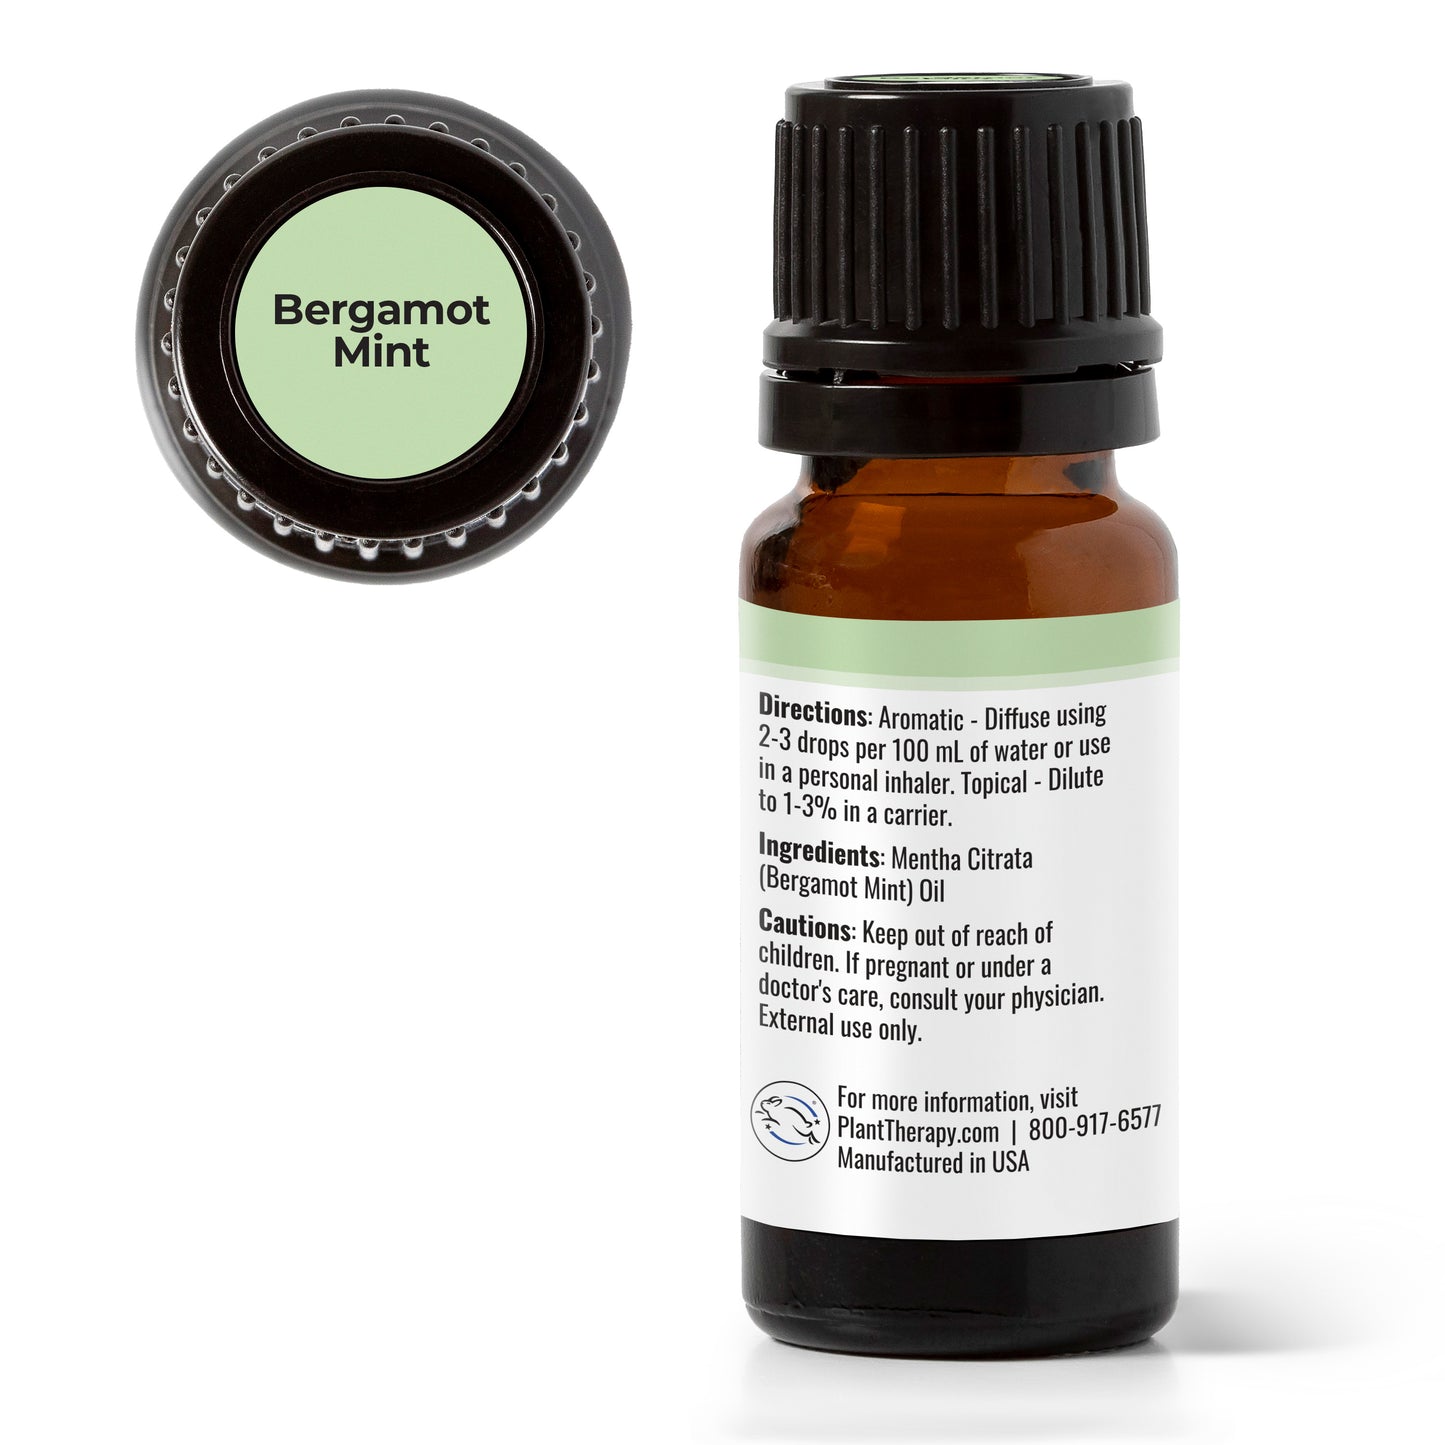 Bergamot Mint Essential Oil